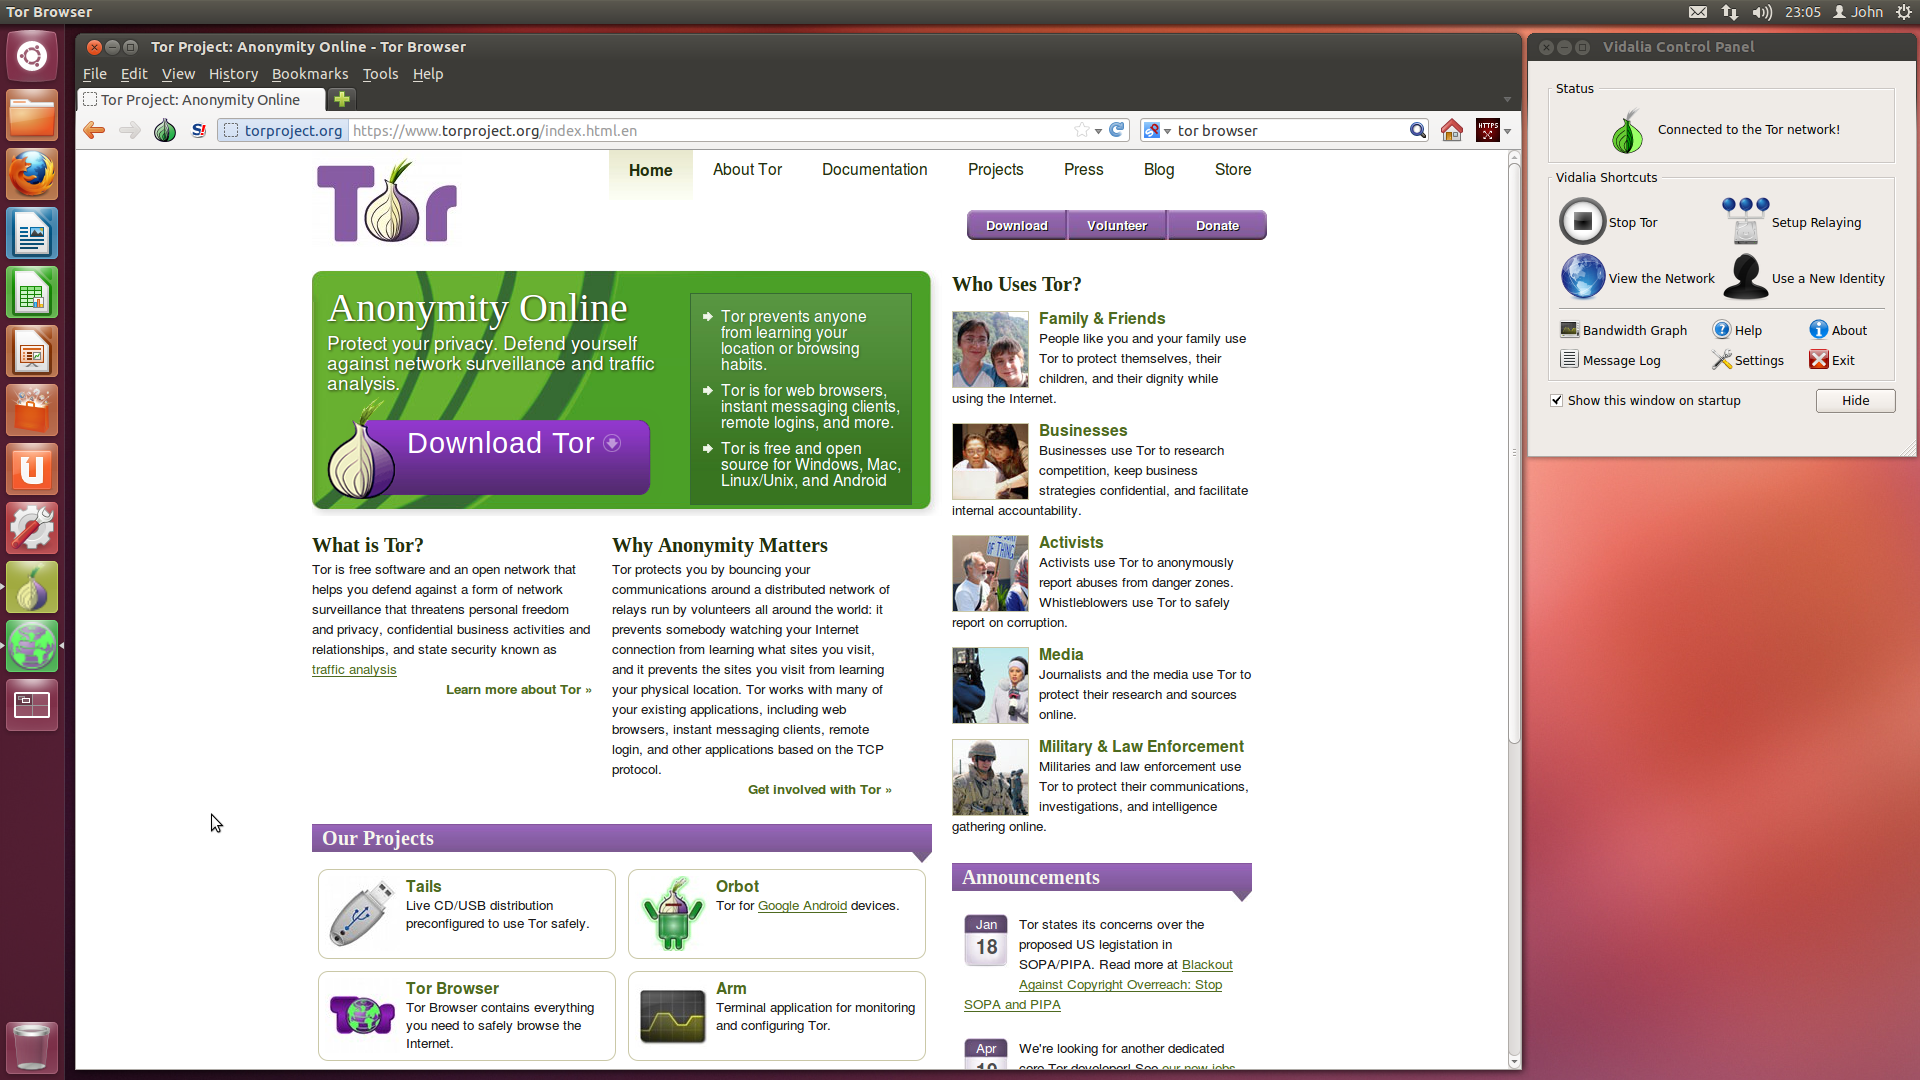 Tor browser lurk mega вход тор браузер новая вкладка mega